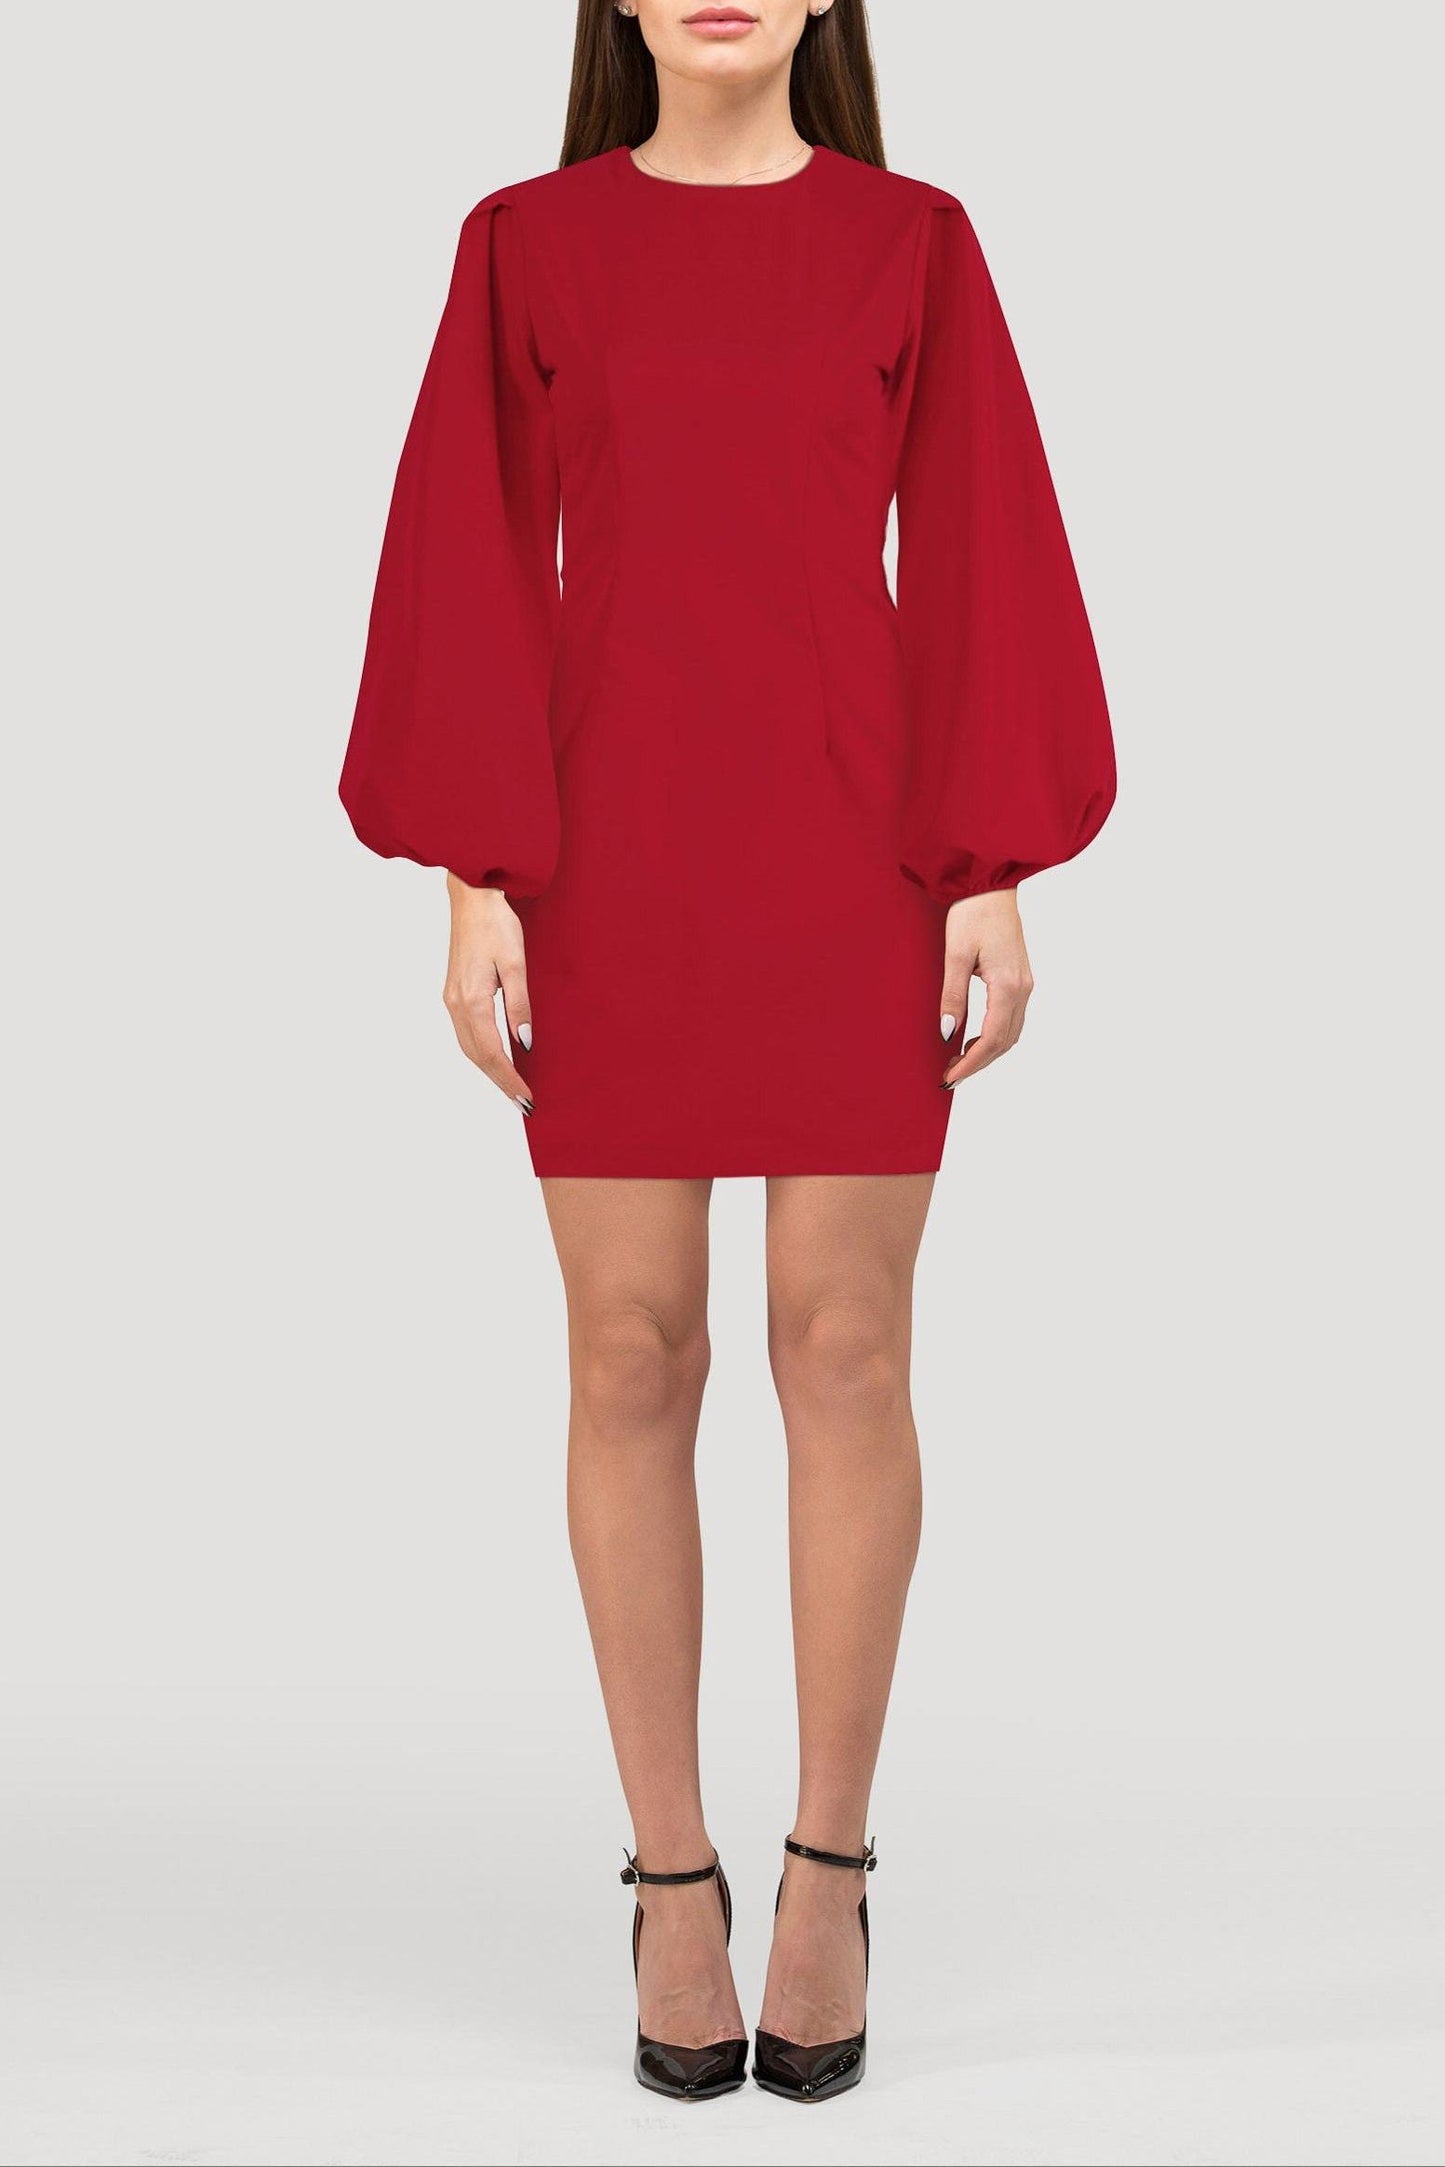 Estelle Lantern Sleeve Dress - S / Red - Clothing